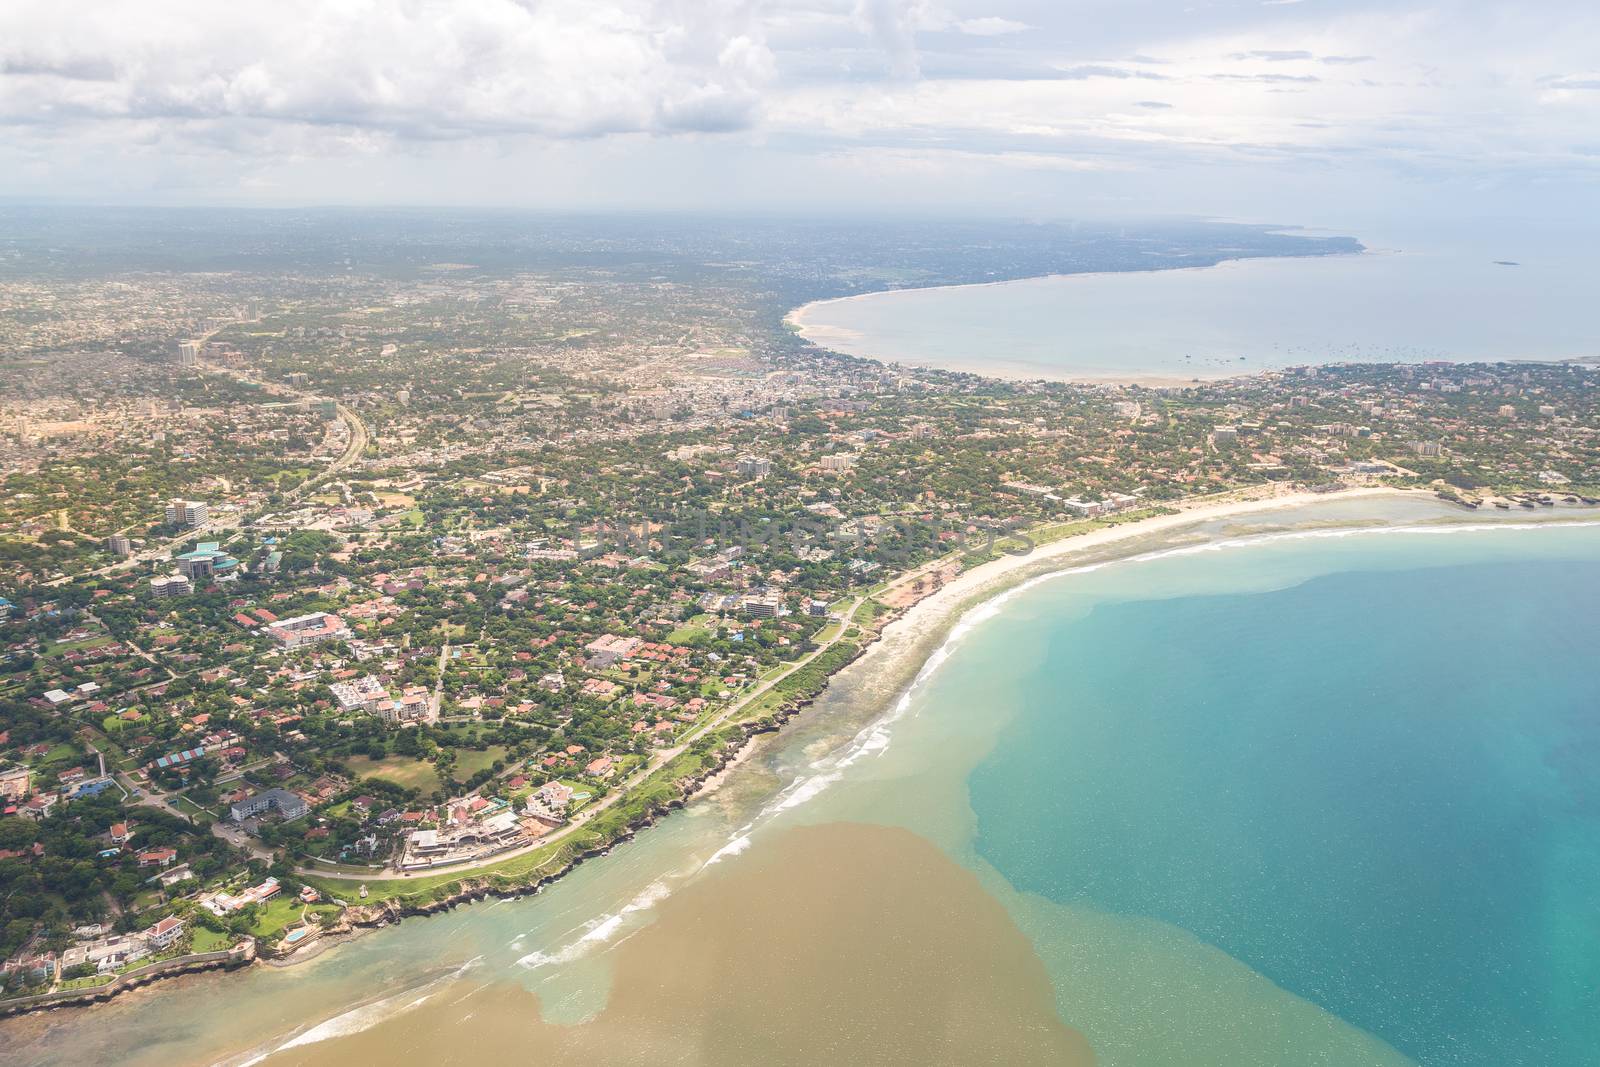 Aerial view of Dar Es Salaam by derejeb